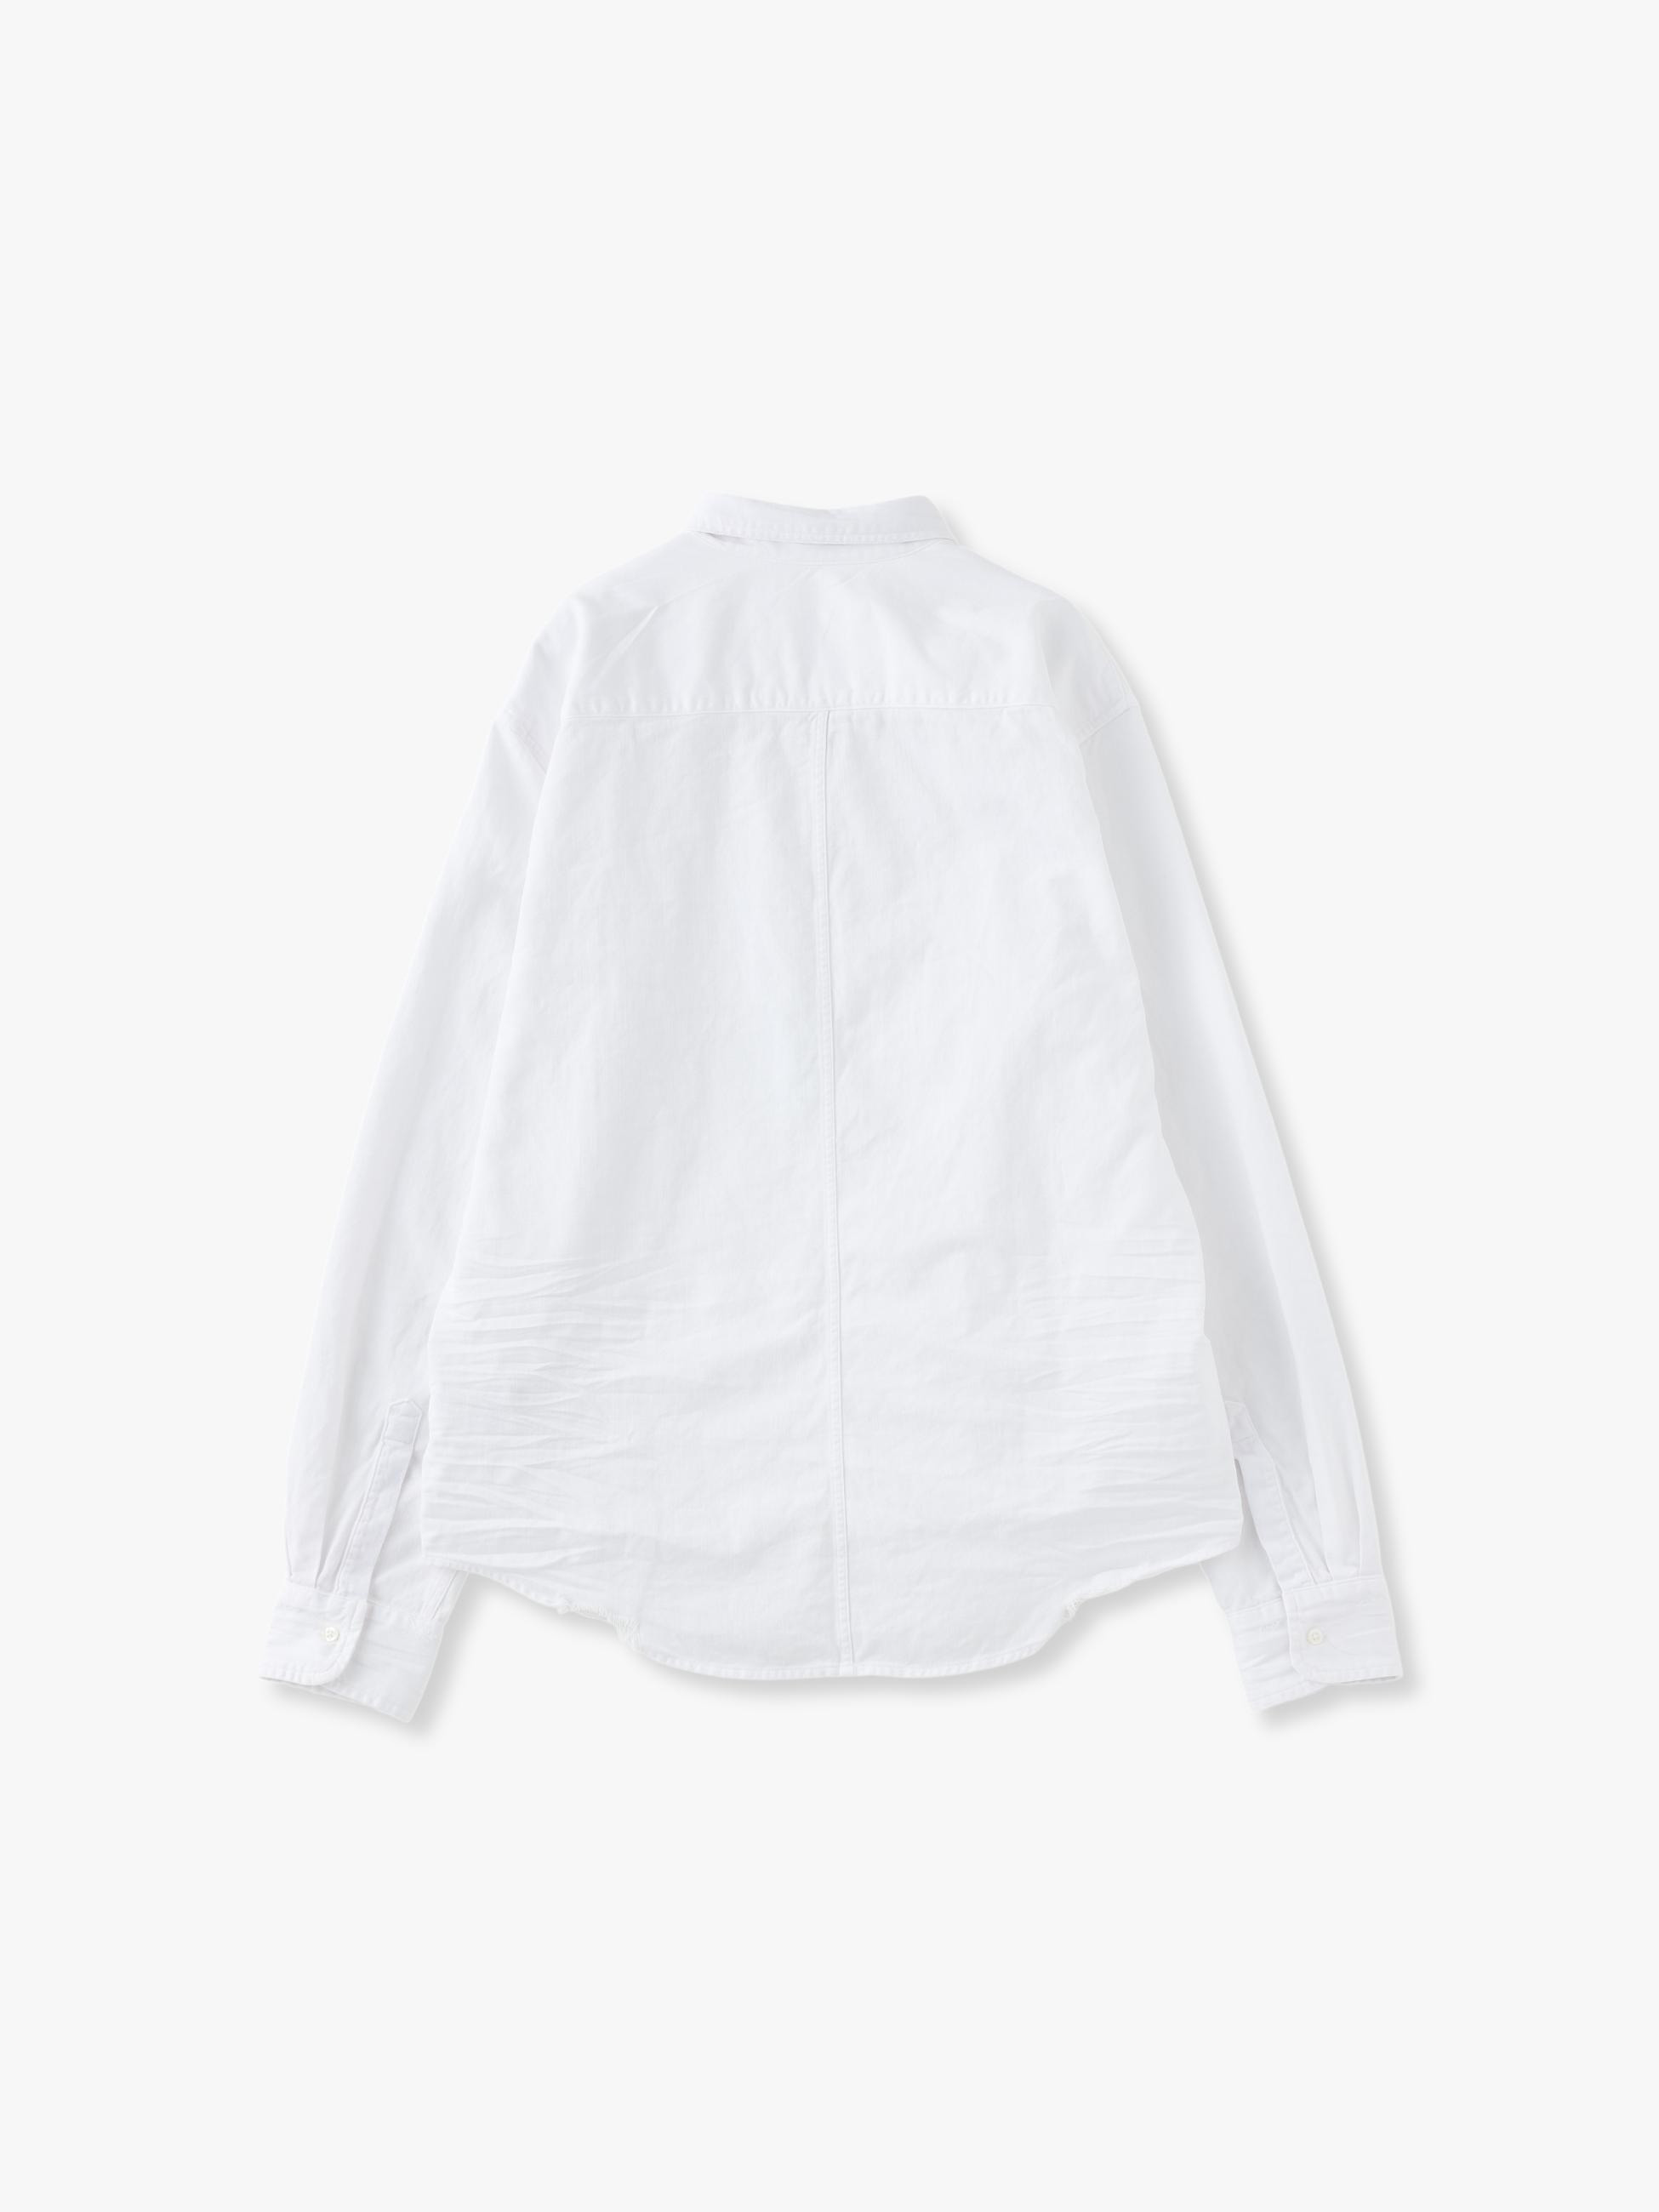 Luke Indigo Washed White Denim Shirt 詳細画像 white 1